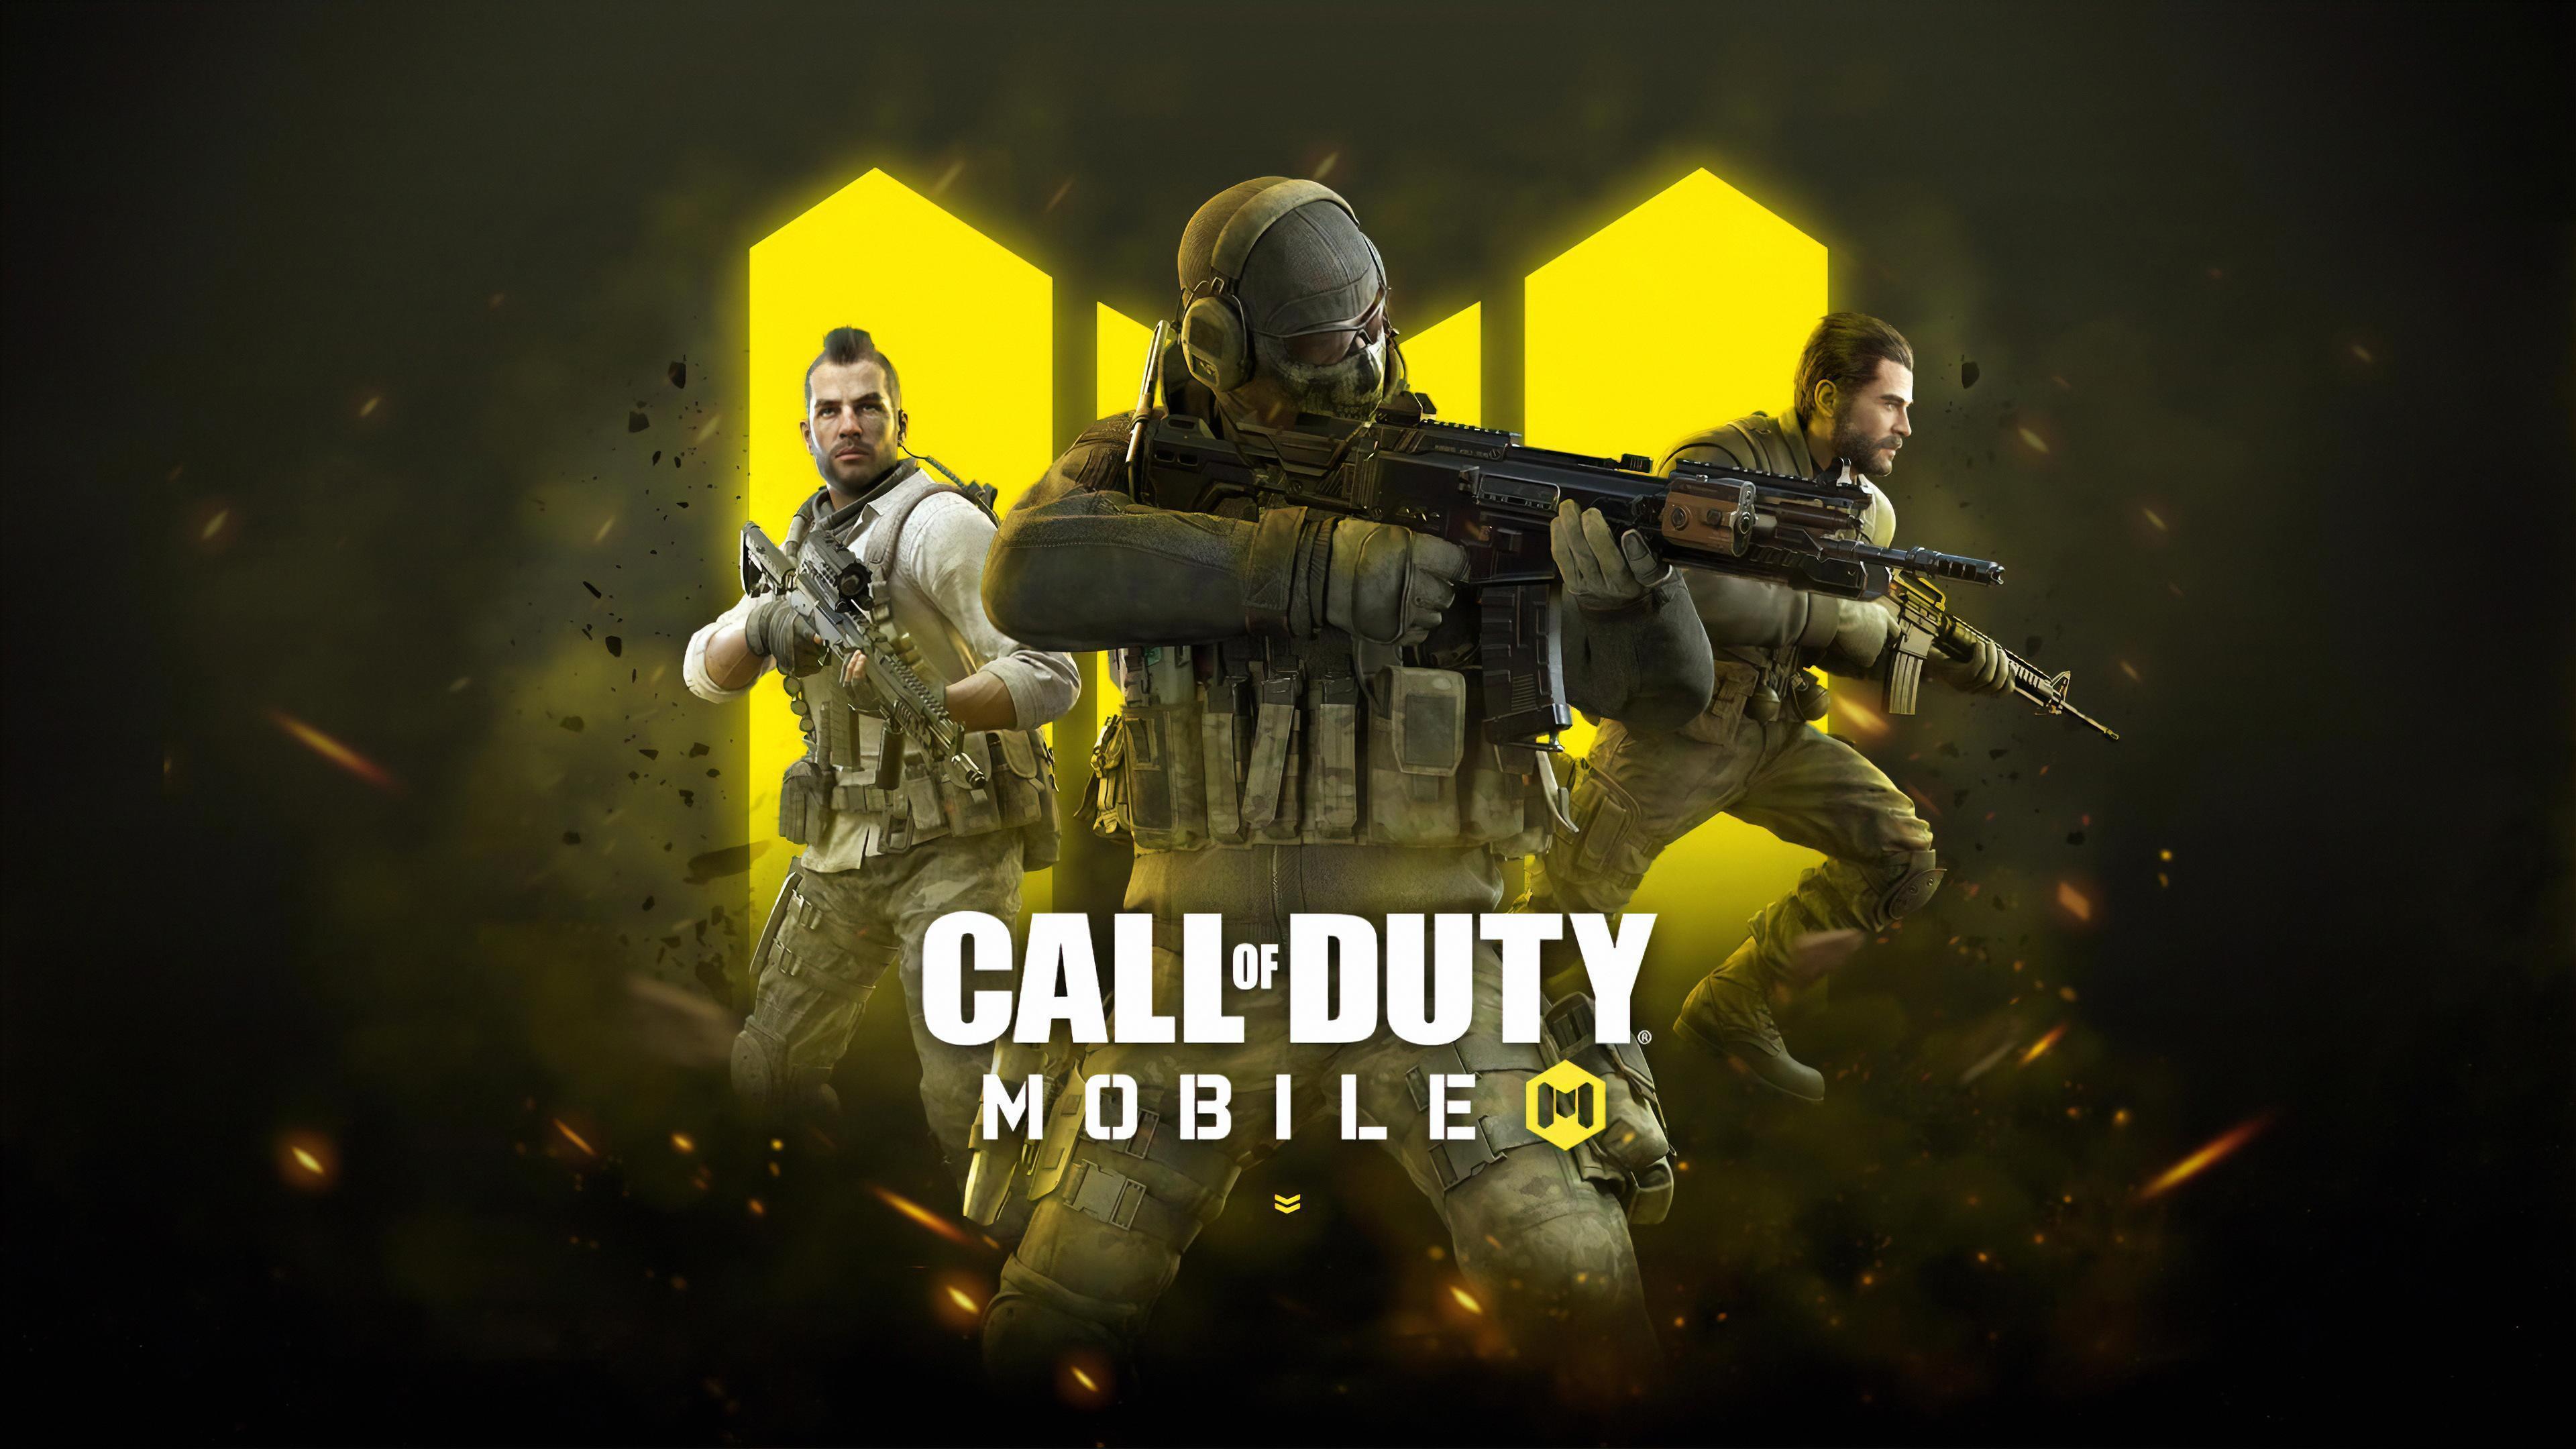 HD wallpaper, 4K, Call Of Duty Mobile